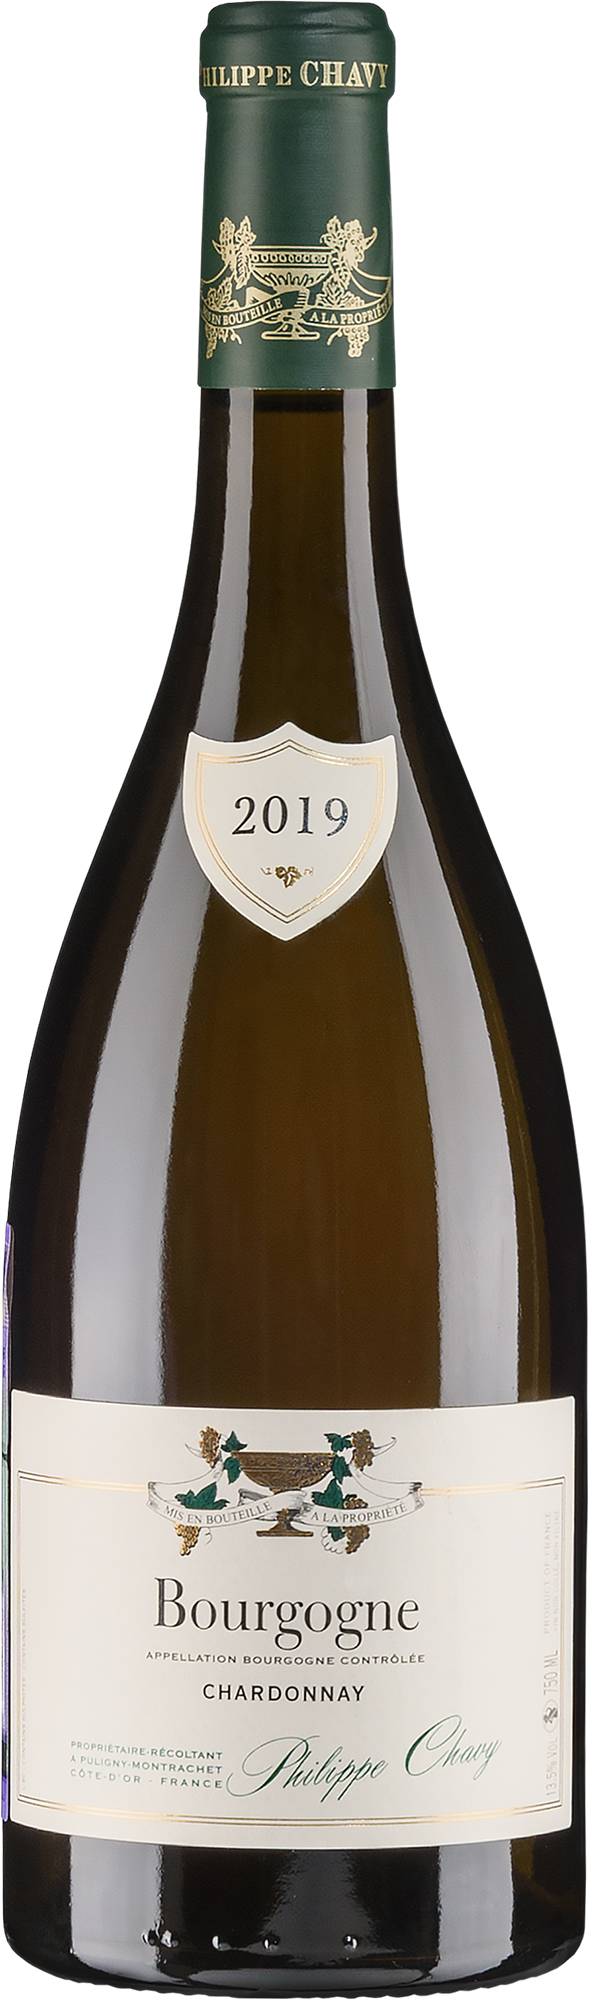 Domaine Philippe Chavy, Bourgogne Chardonnay, 2019